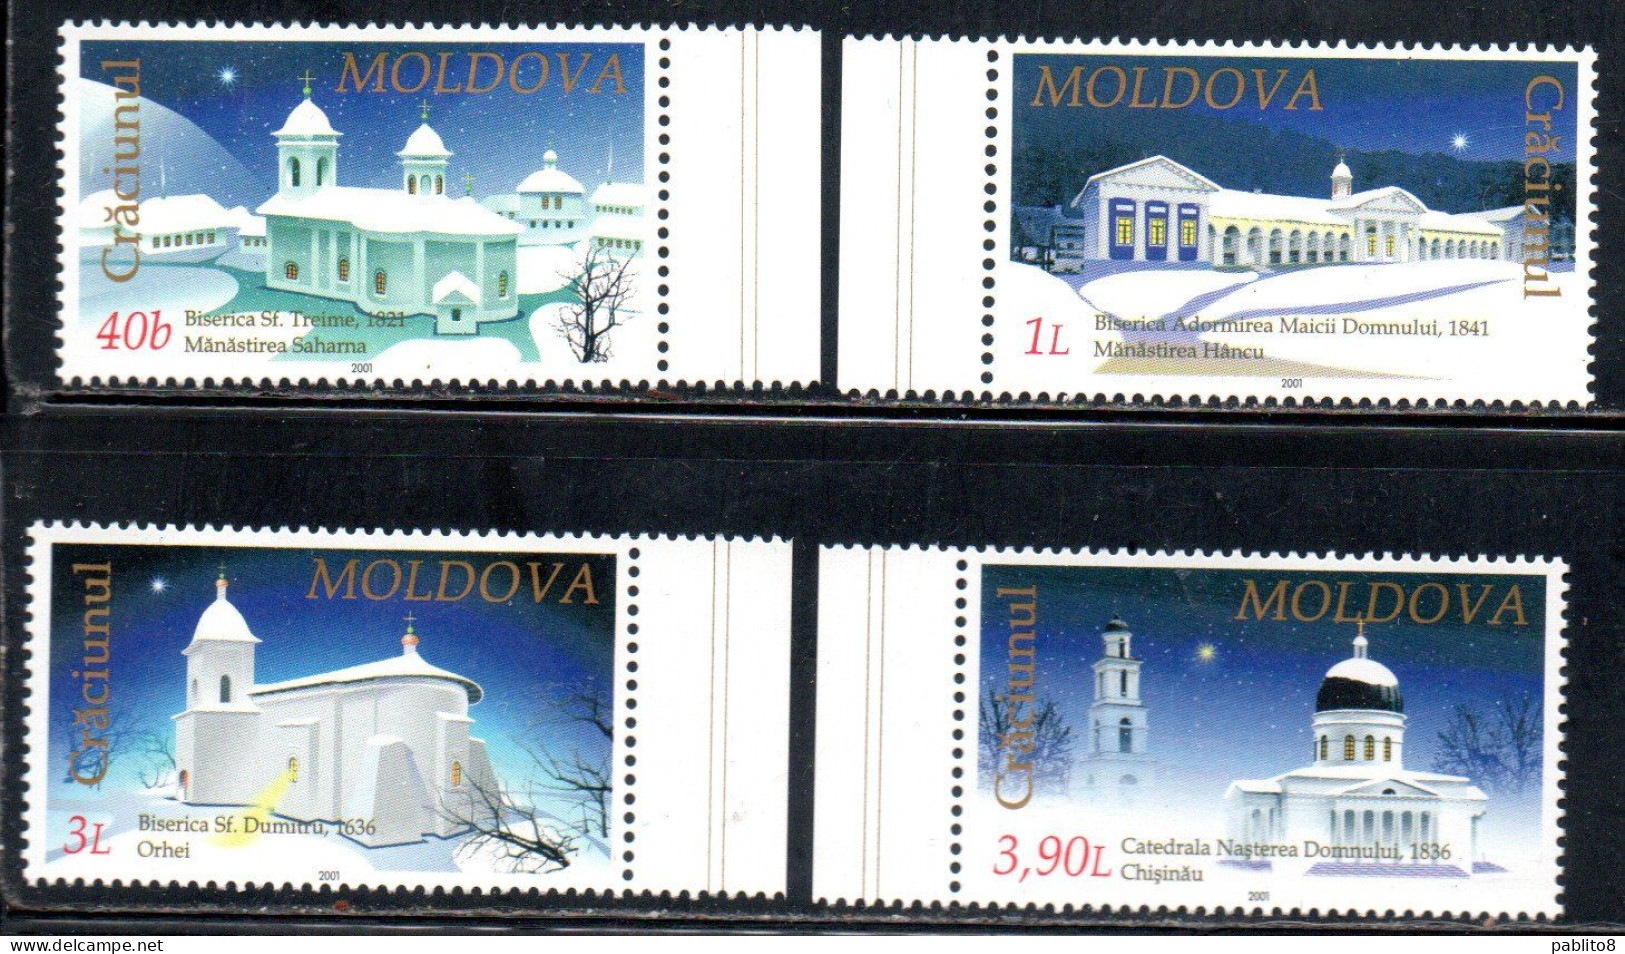 MOLDAVIA MOLDOVA 2001 CHRISTMAS NATALE NOEL WEIHNACHTEN NAVIDAD COMPLETE SET SERIE COMPLETA MNH - Moldova